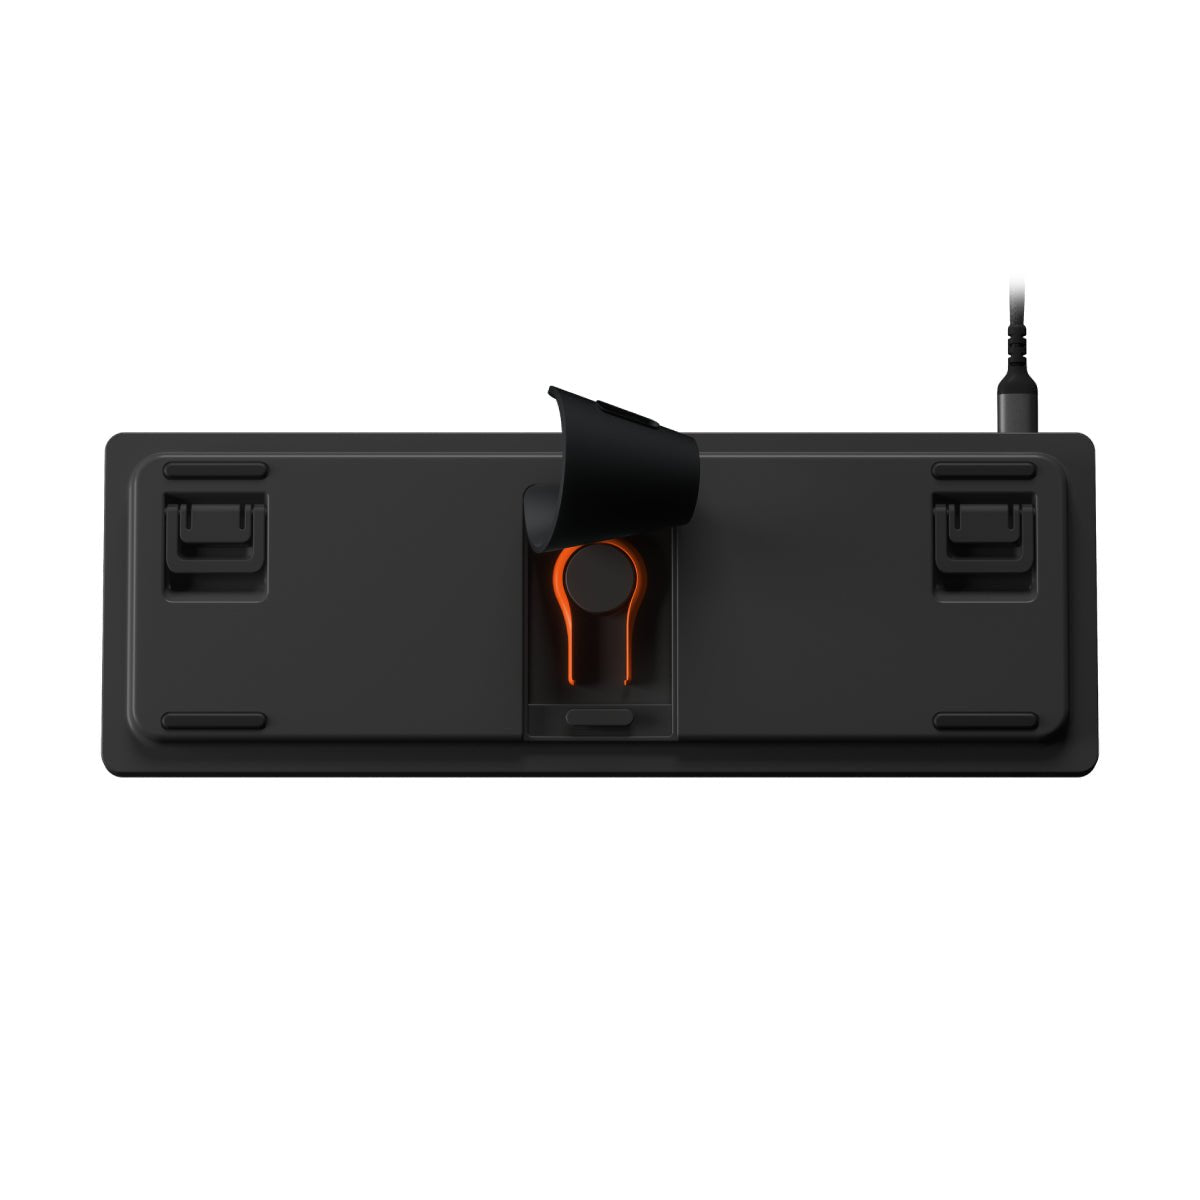 SteelSeries APEX 9 Mini 60% RGB Wired Gaming Keyboard - Black - Store 974 | ستور ٩٧٤